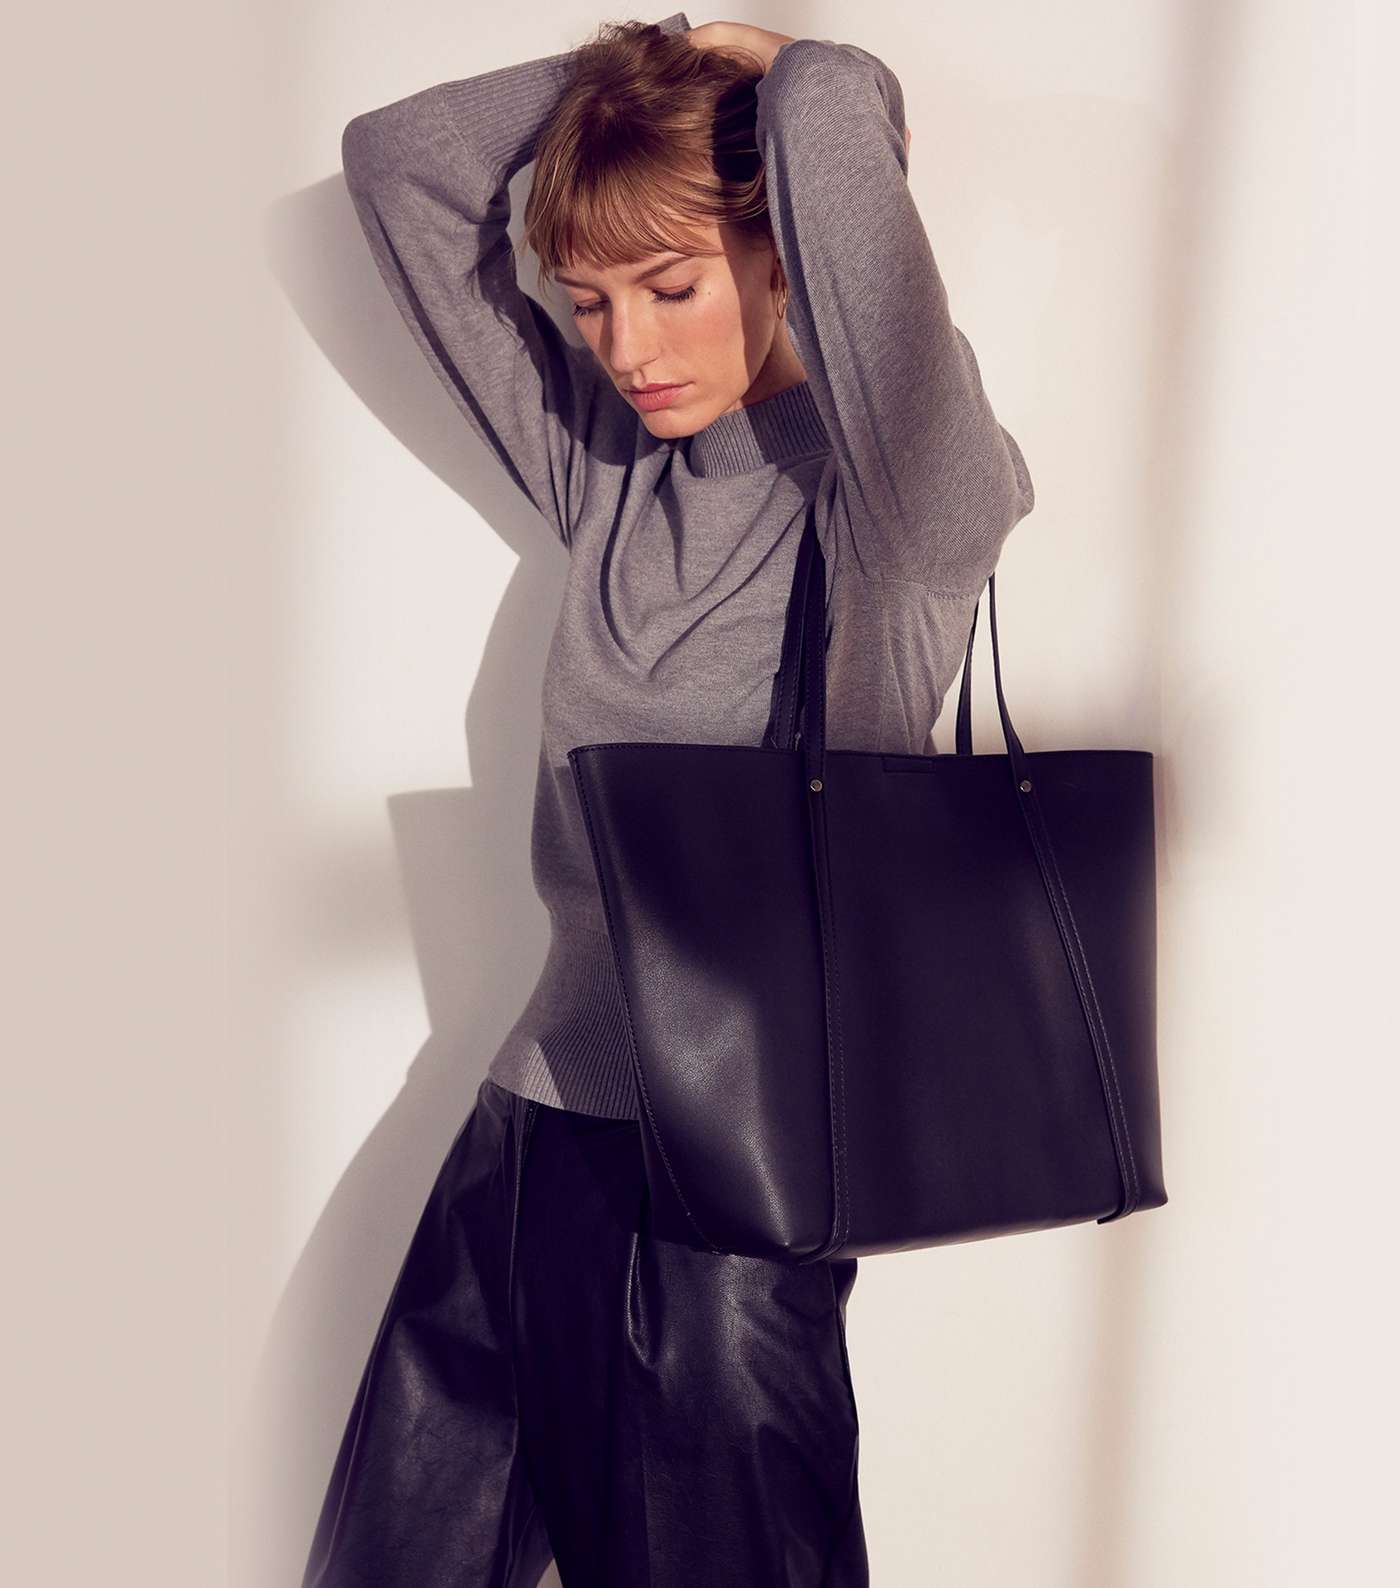 Black Leather-Look Large Tote Bag